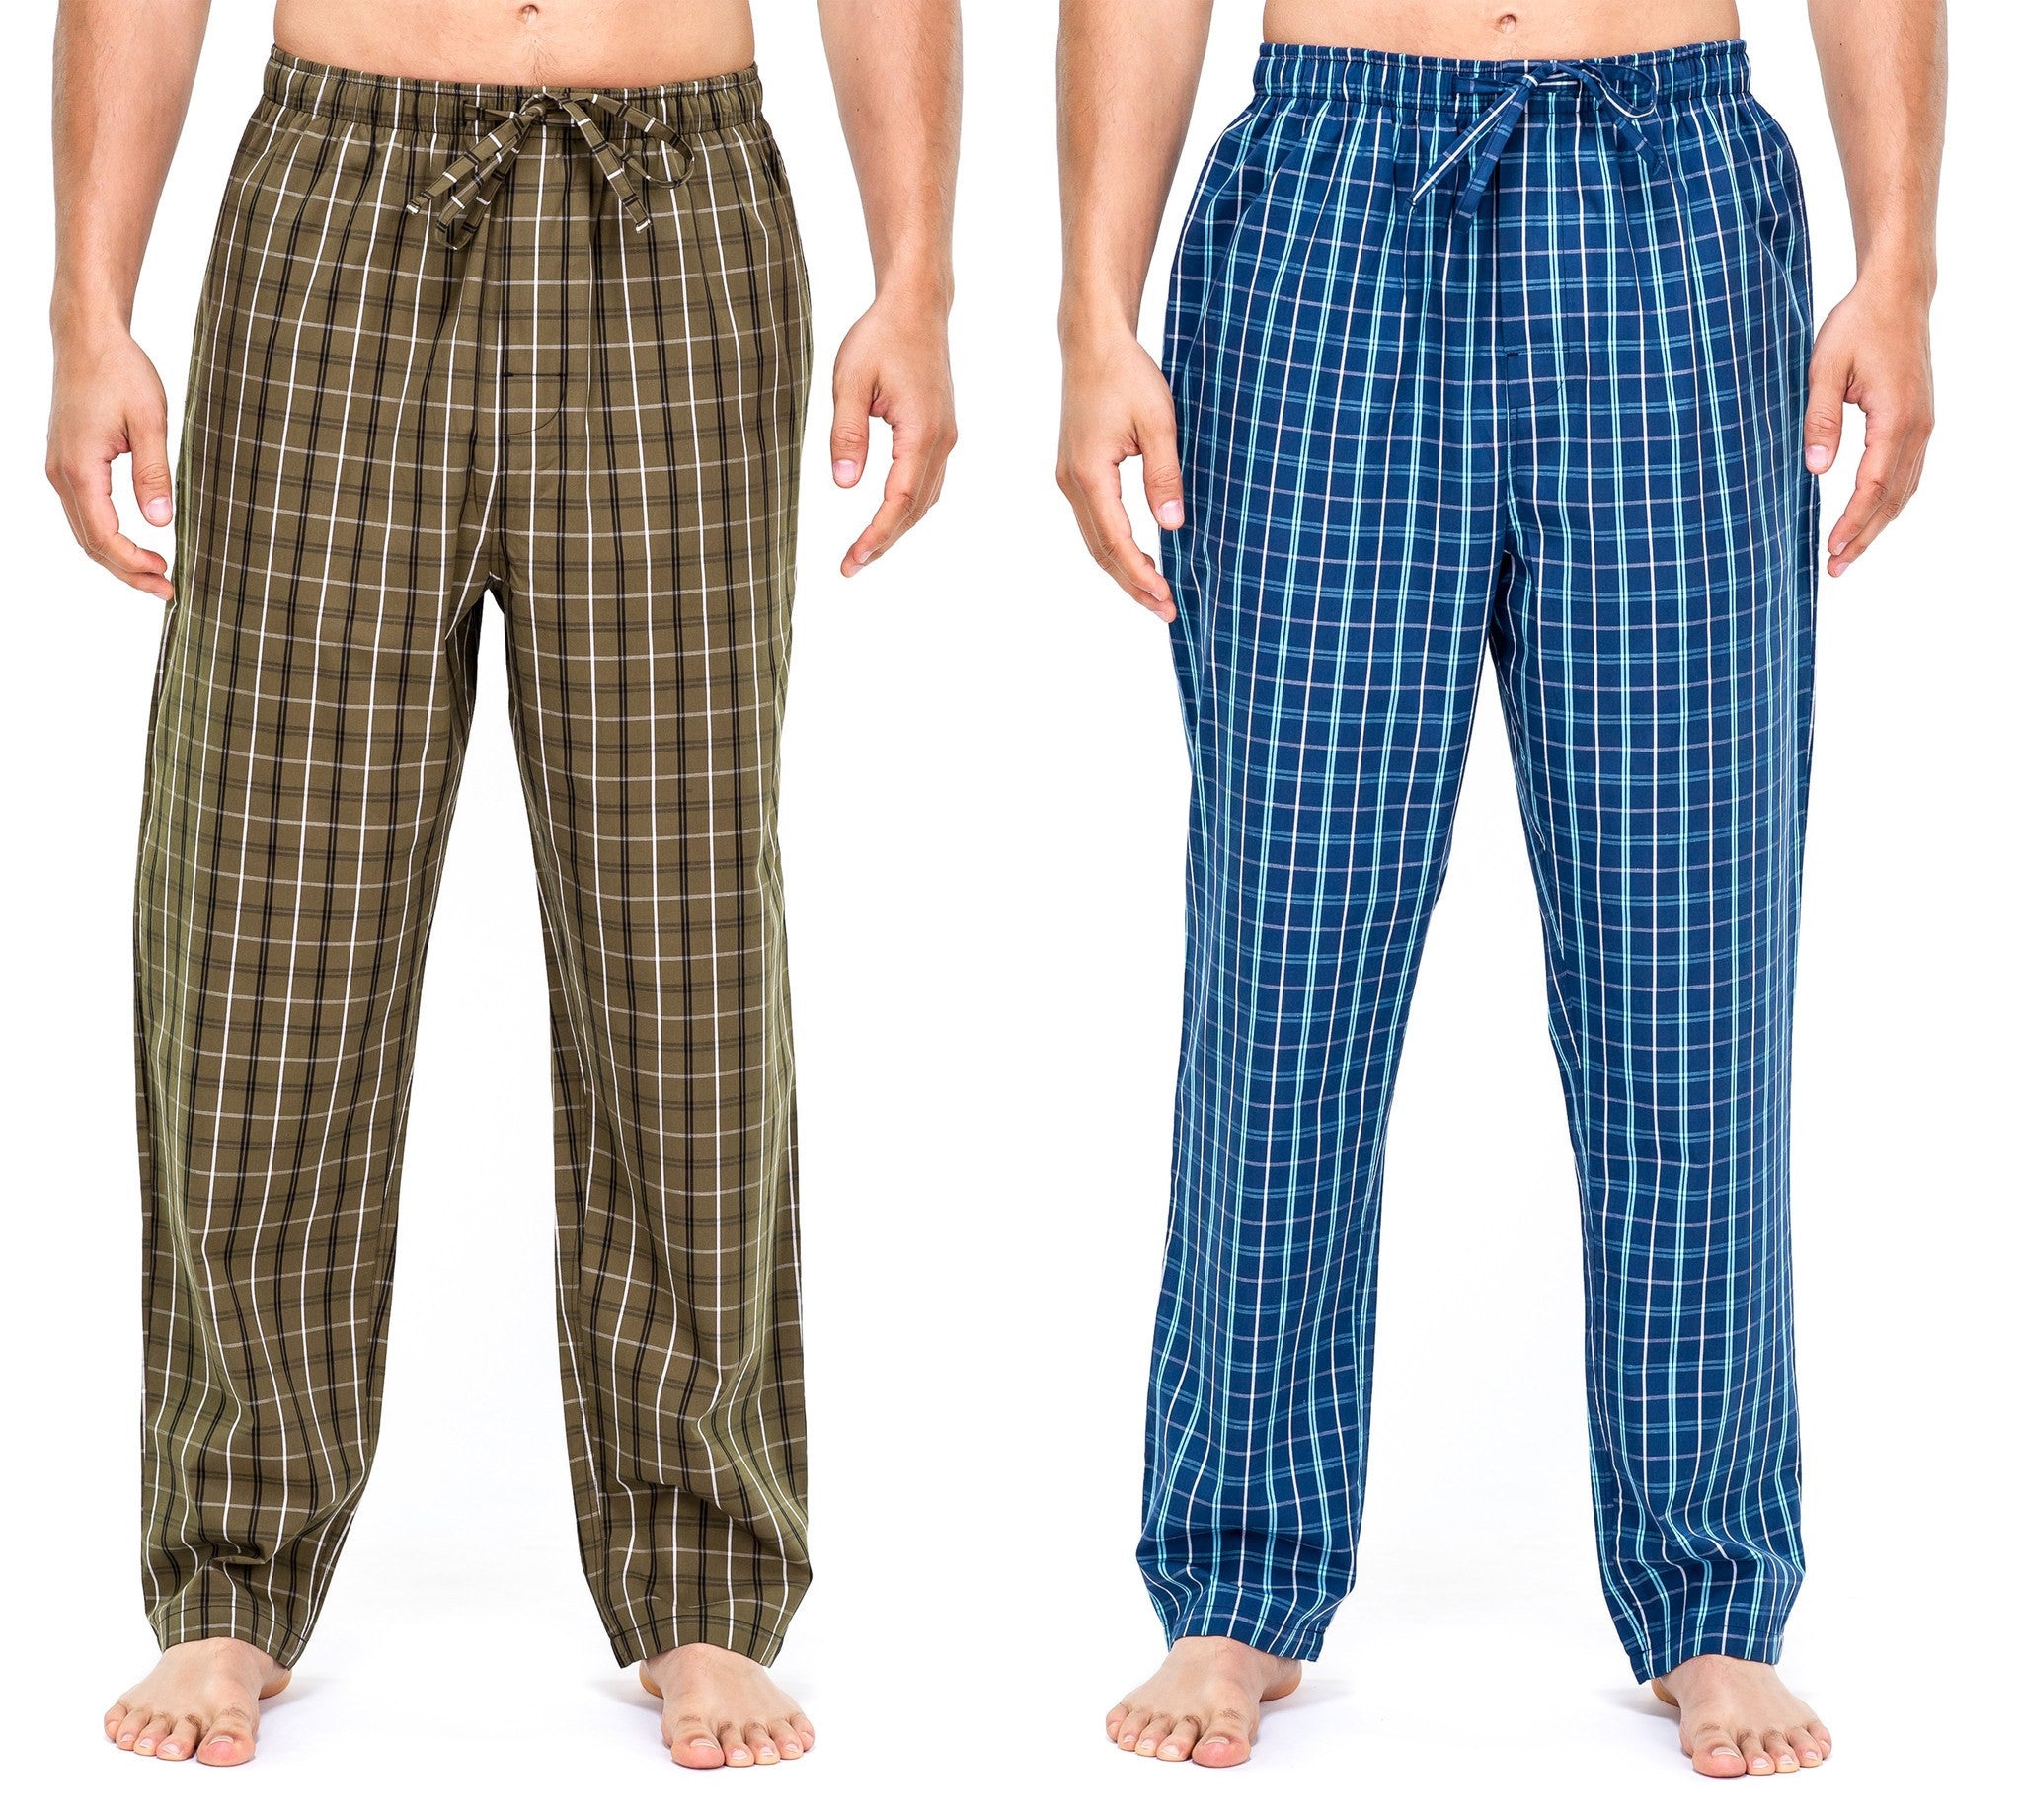 Men's Premium Cotton Lounge/Sleep Pants - 2 Pack